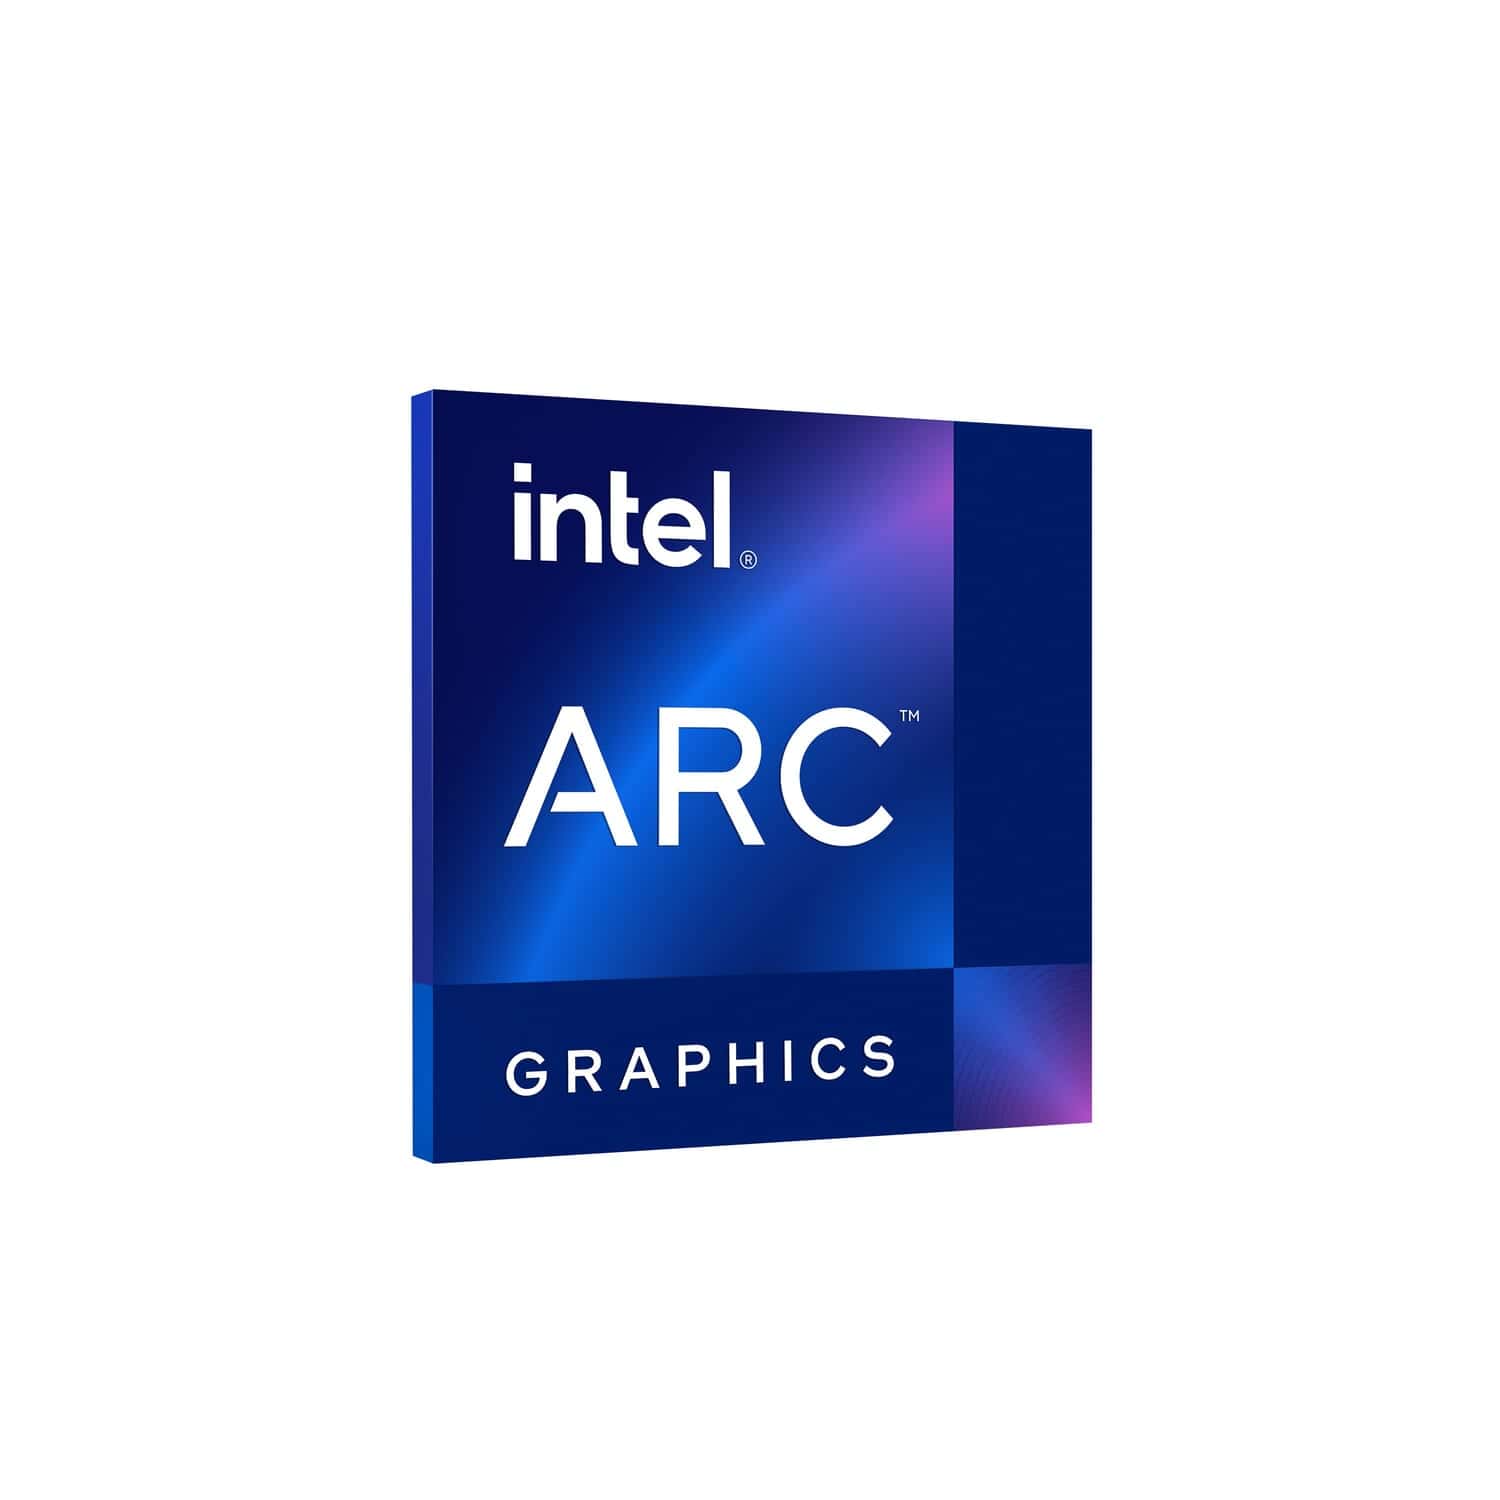 Intelの次期ディスクリートGPU「Arc A」シリーズの未発表ラインナップがドライバから判明